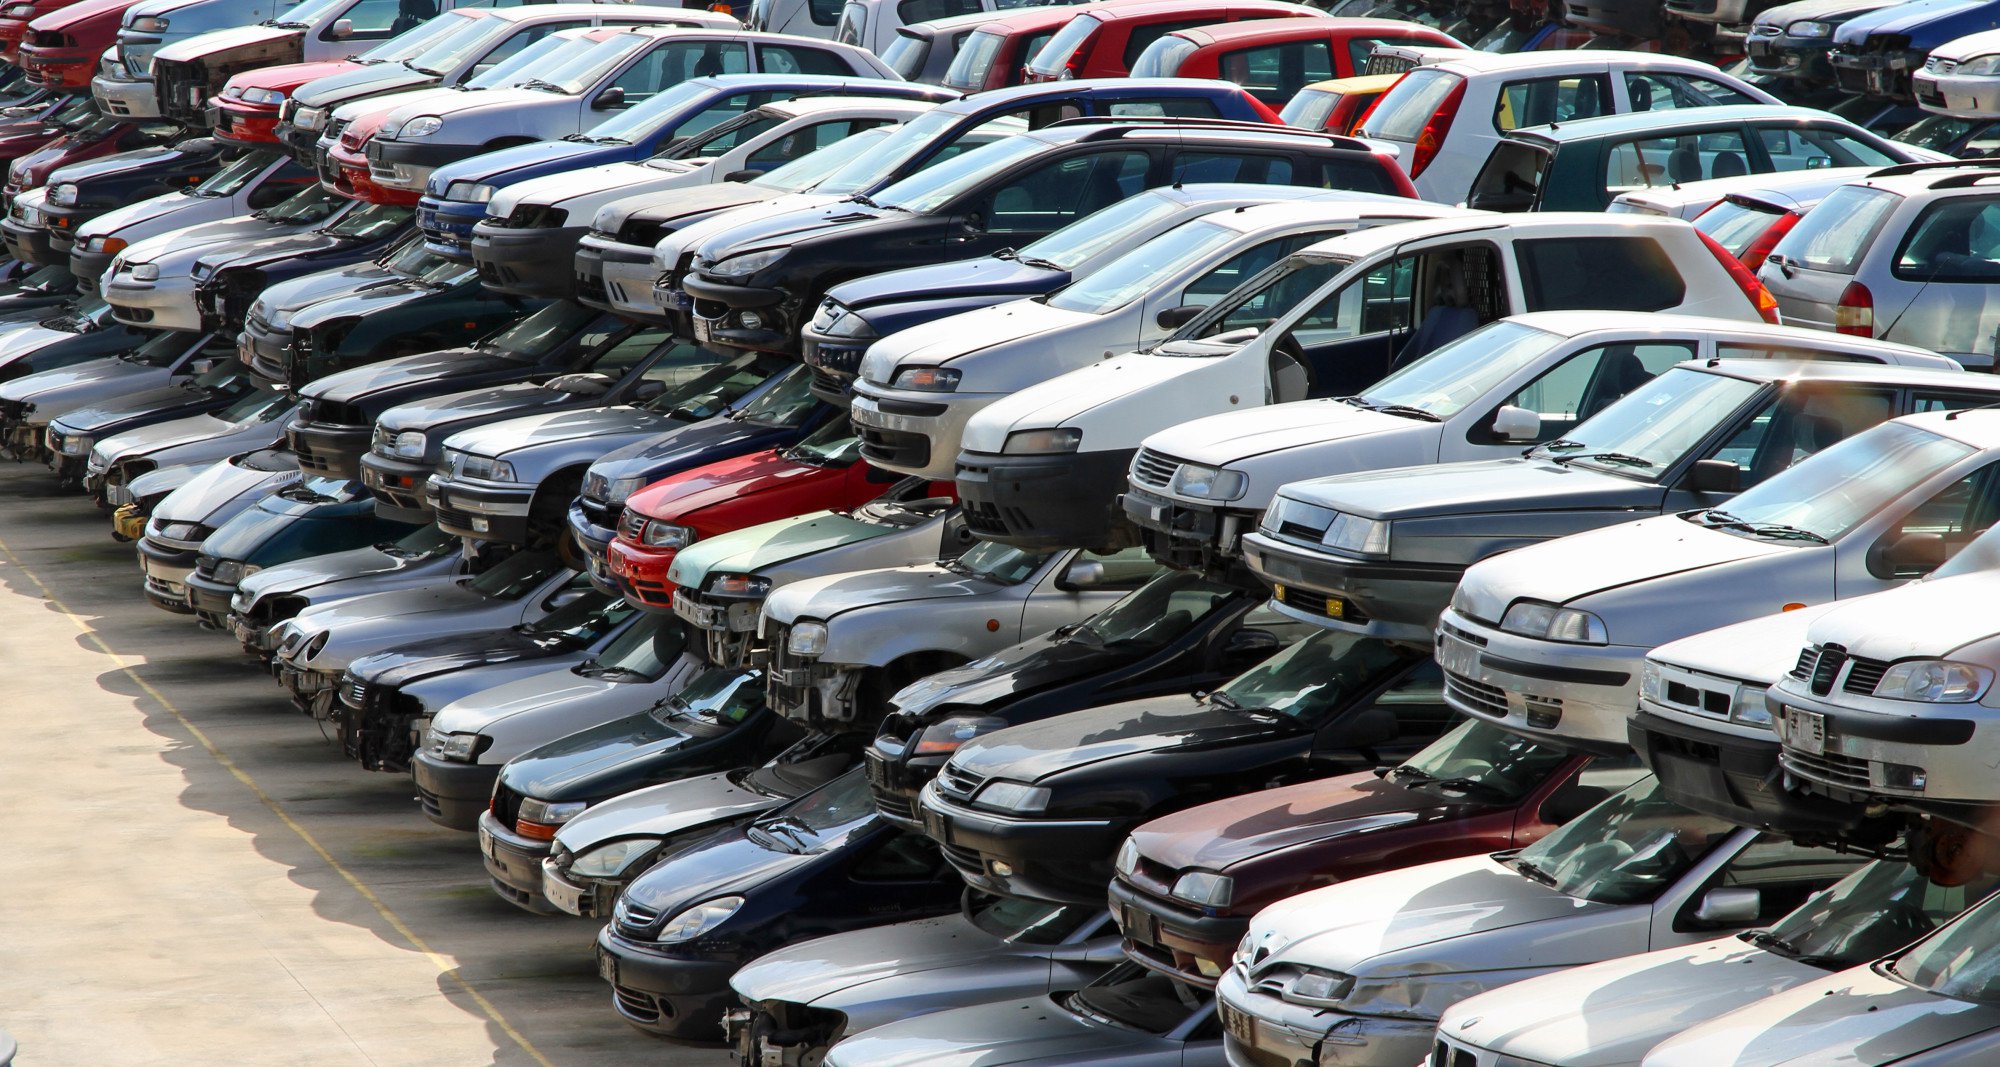 How To Find A Legit Junk Car Buyers In Wichita KS: The Ultimate Guide